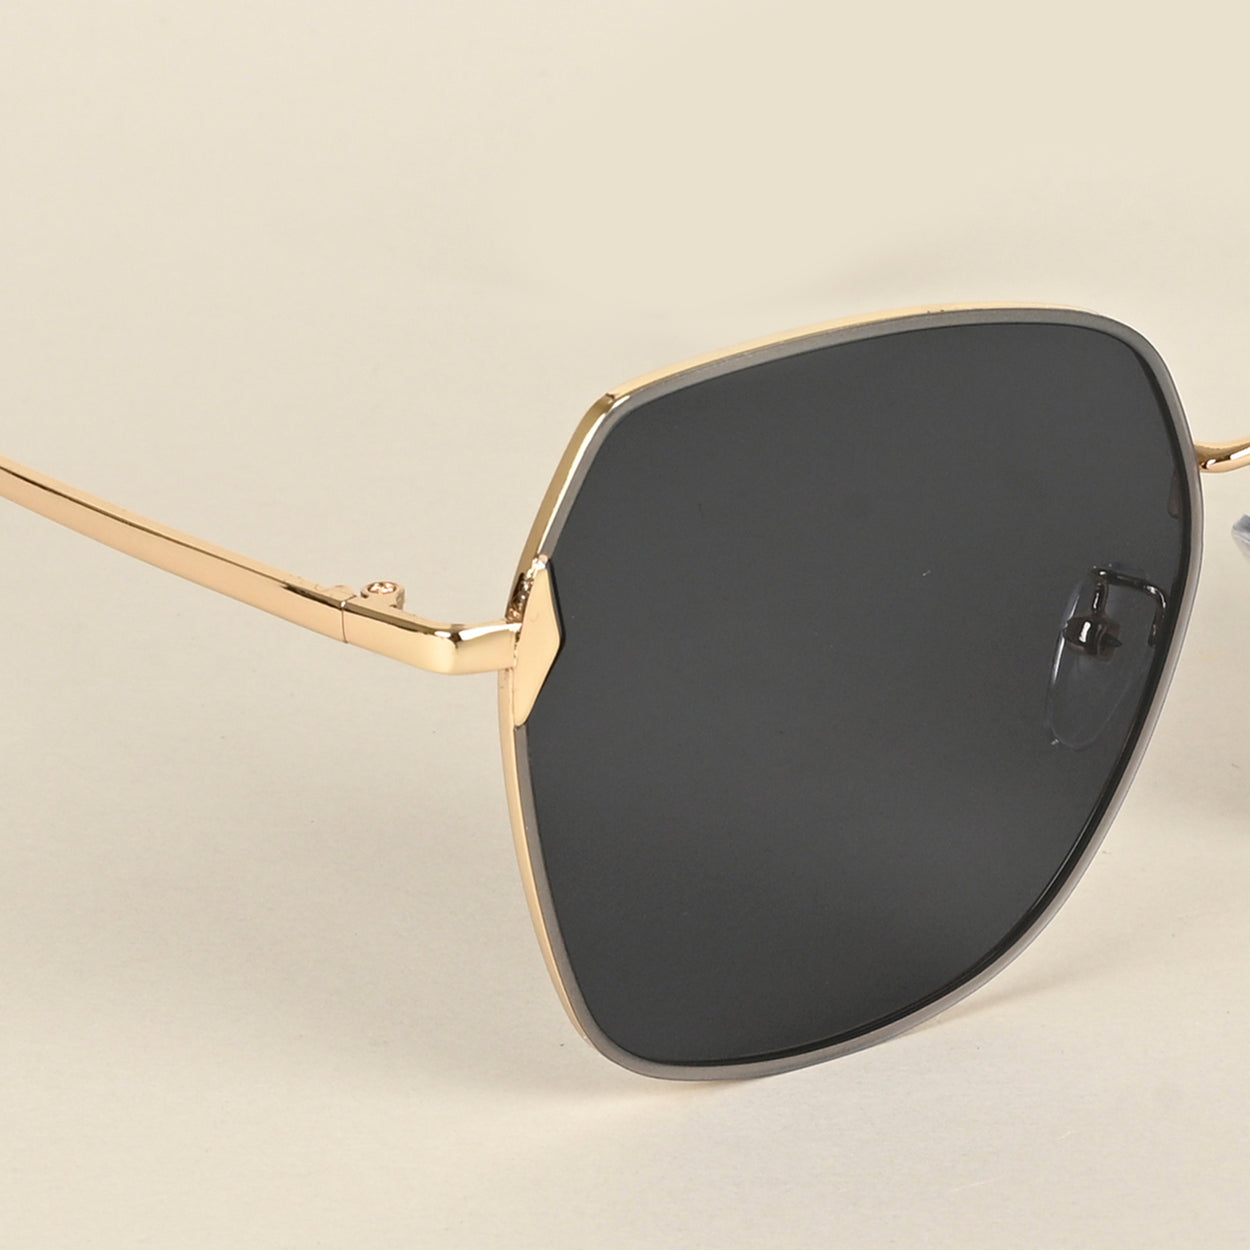 Voyage Black Oversize Sunglasses for Women - MG4326